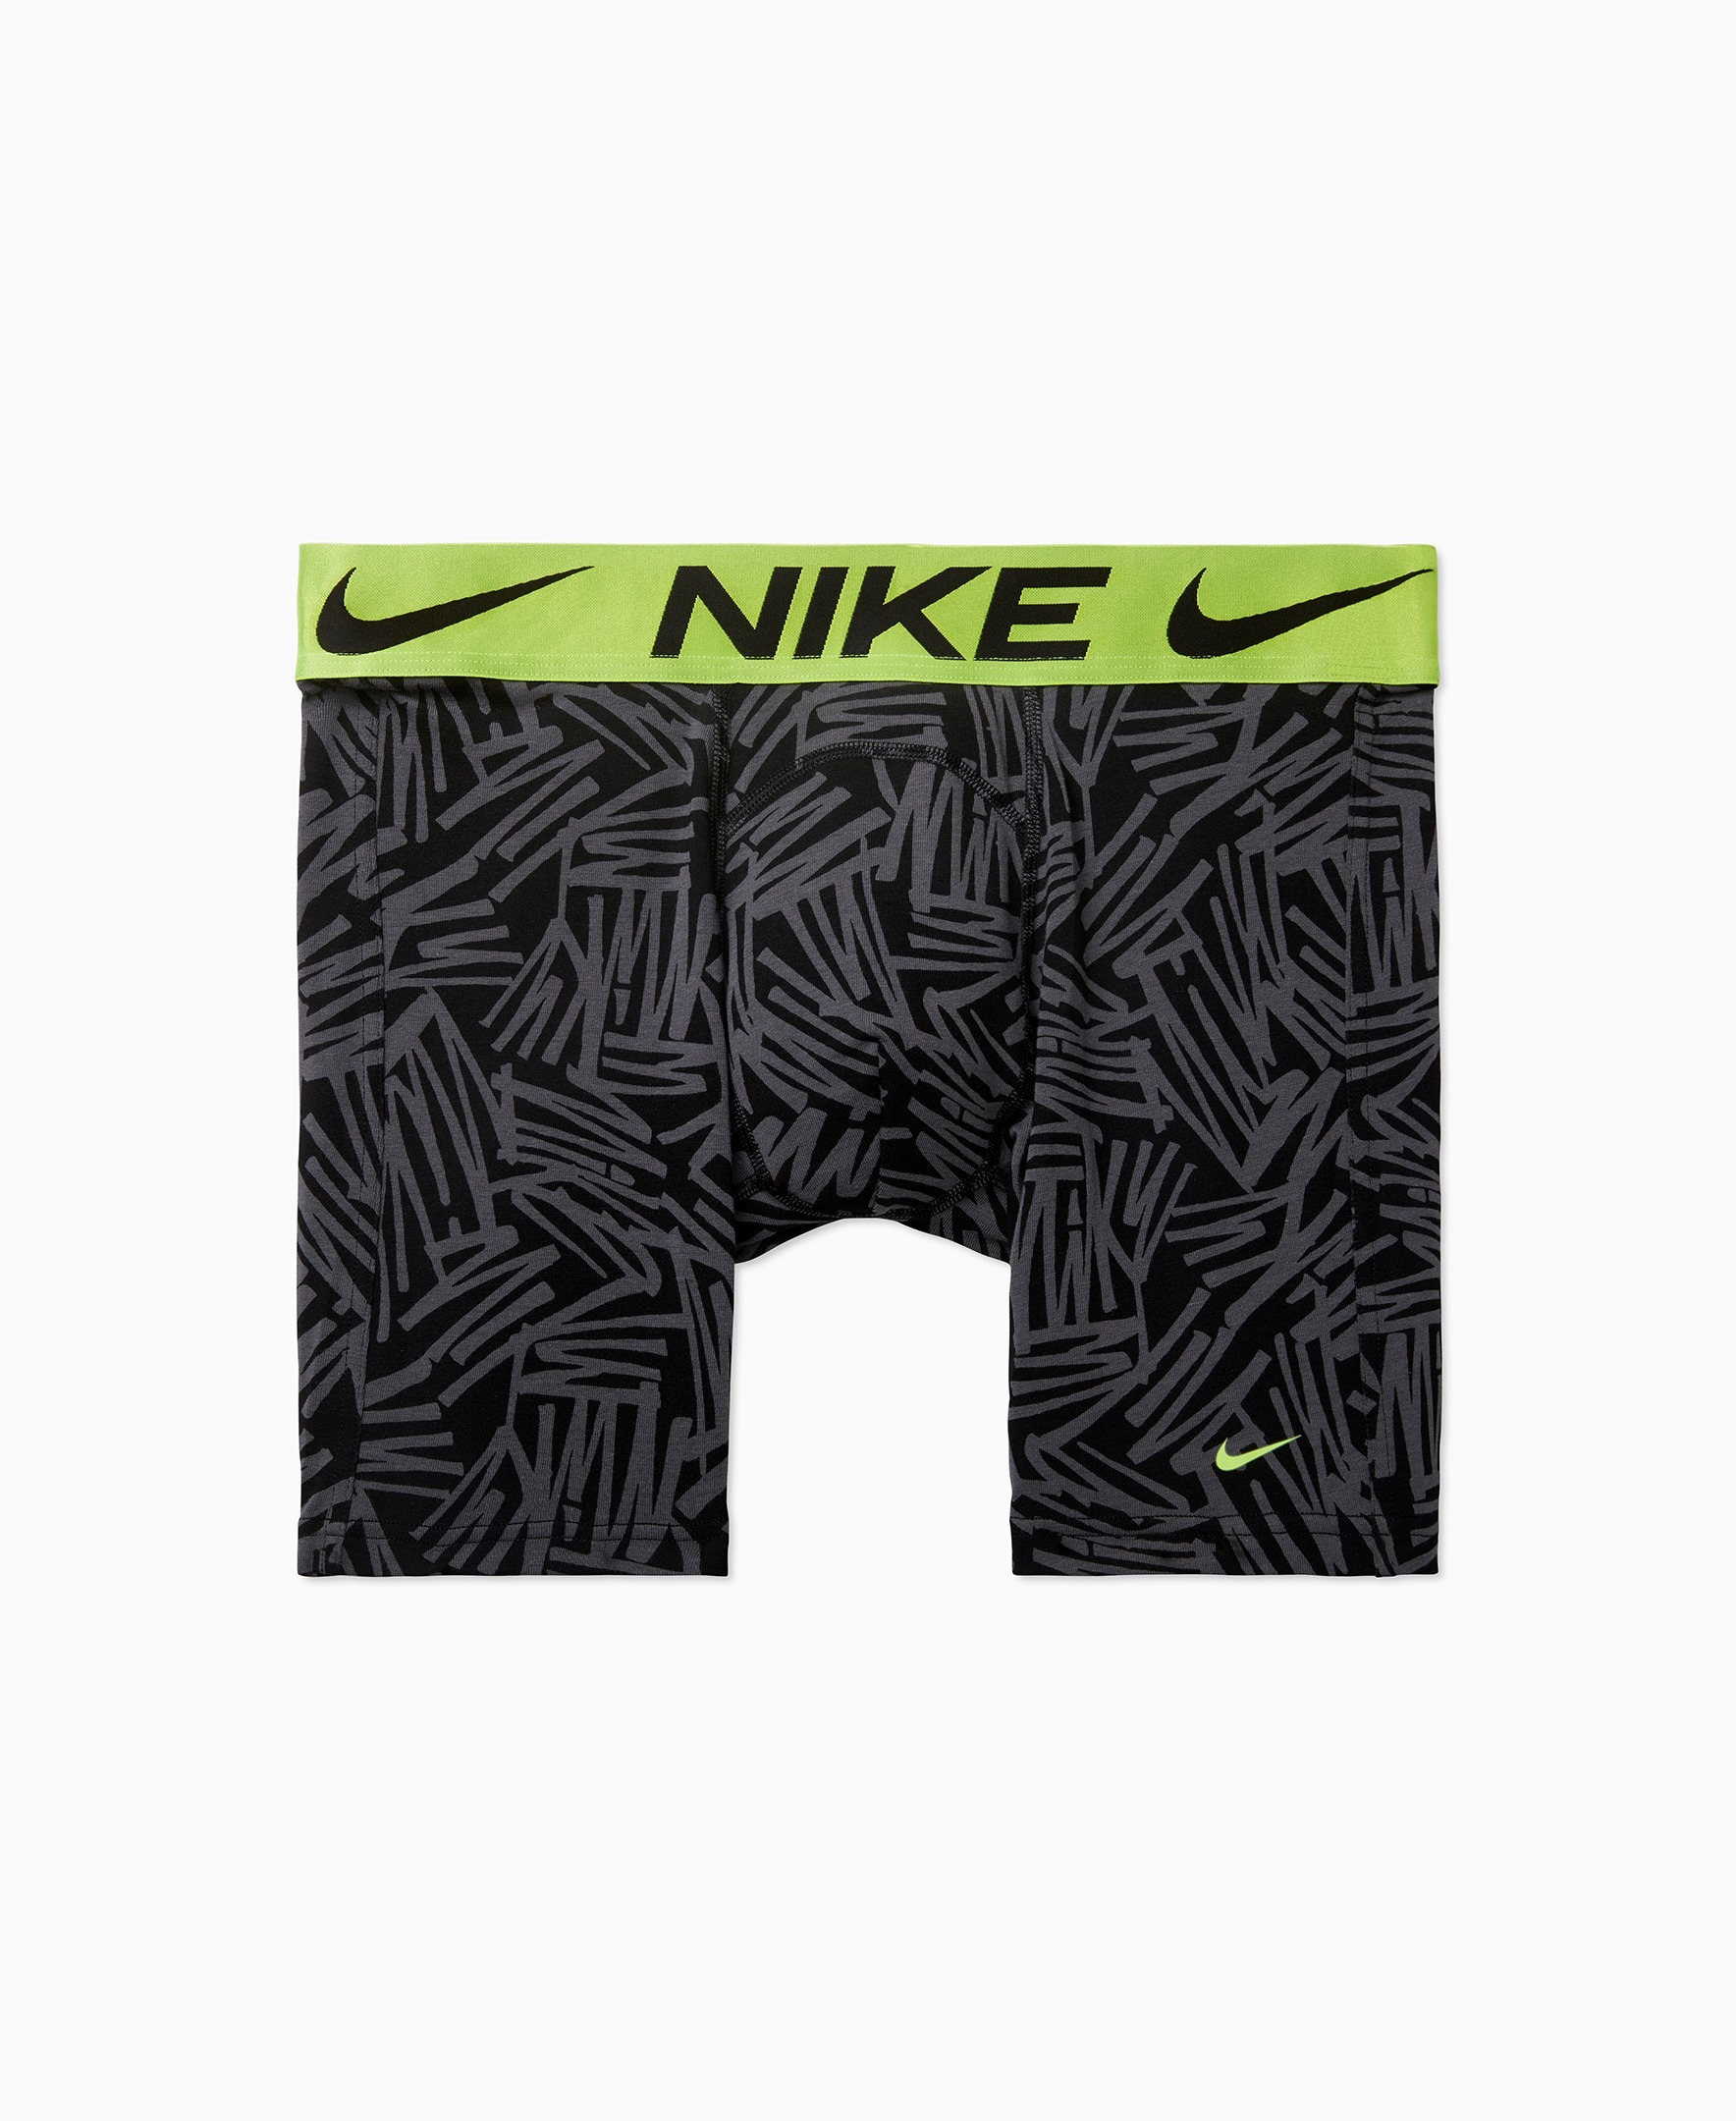 Nike Drops New Underwear Campaign Starring Marcus Rashford